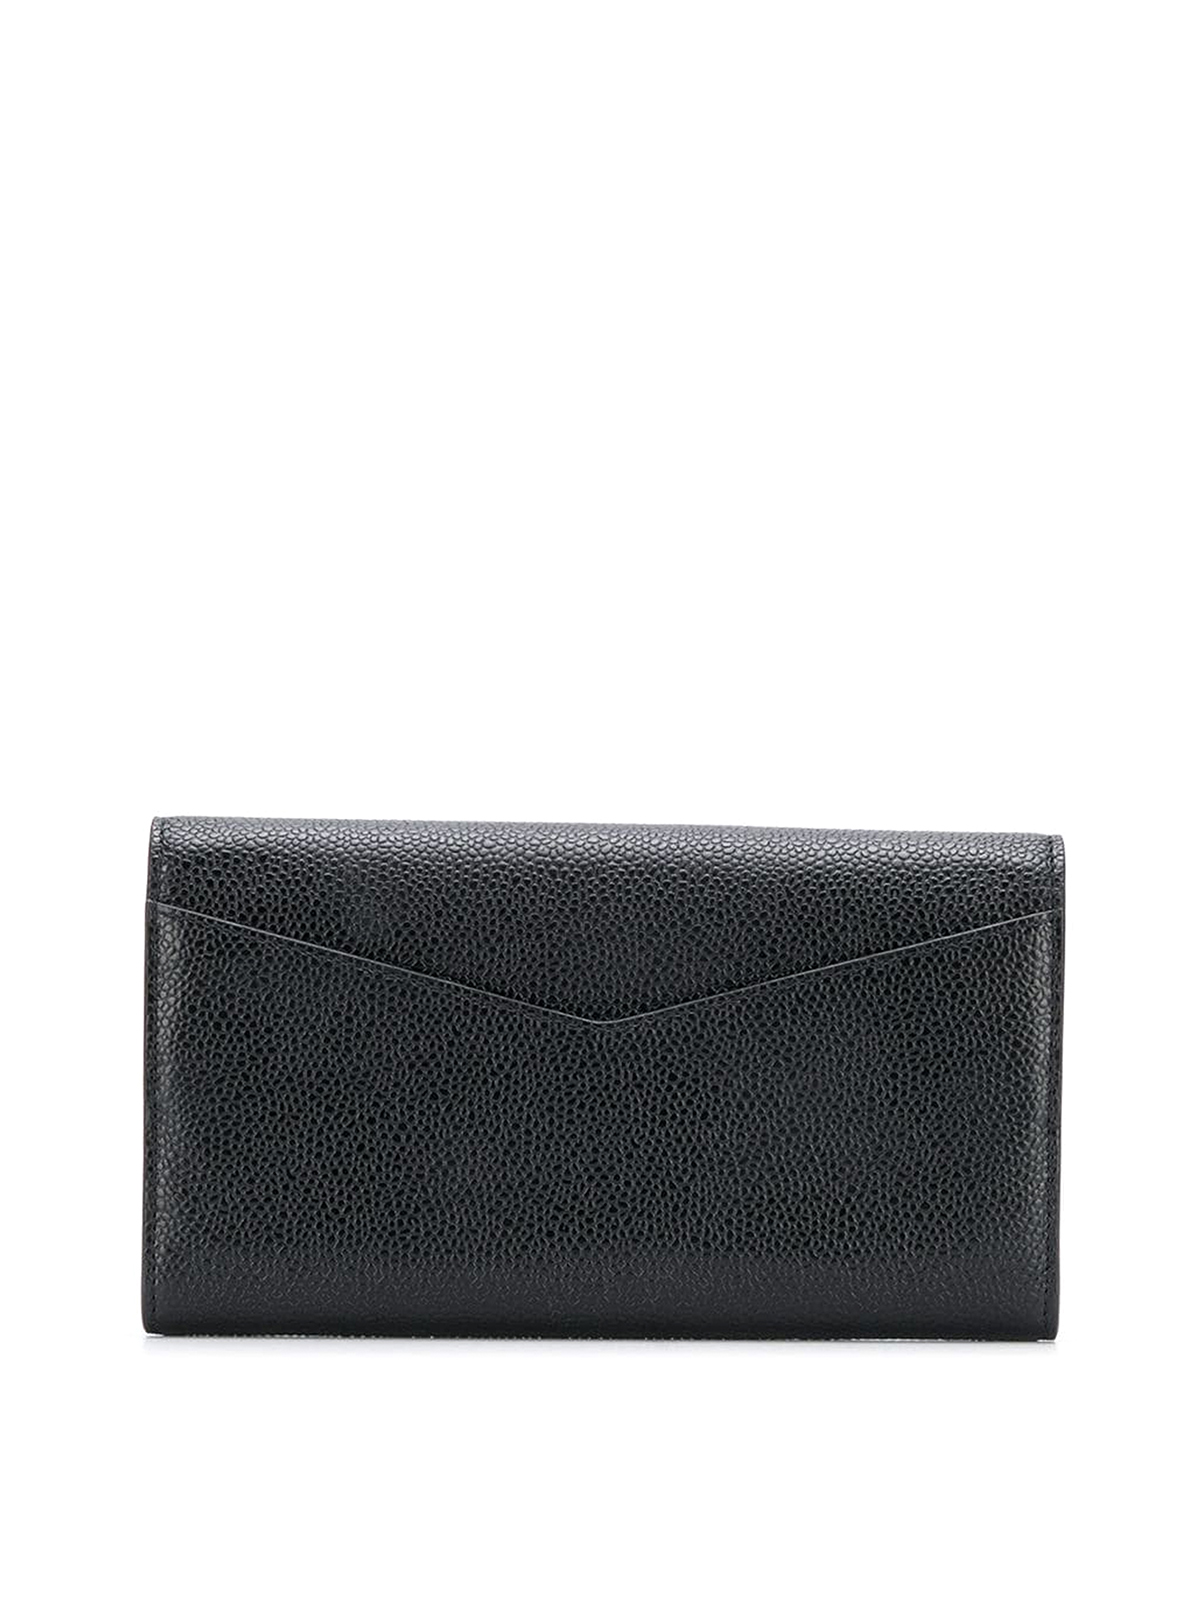 Shop Thom Browne Pebbled Leather Wallet In Black